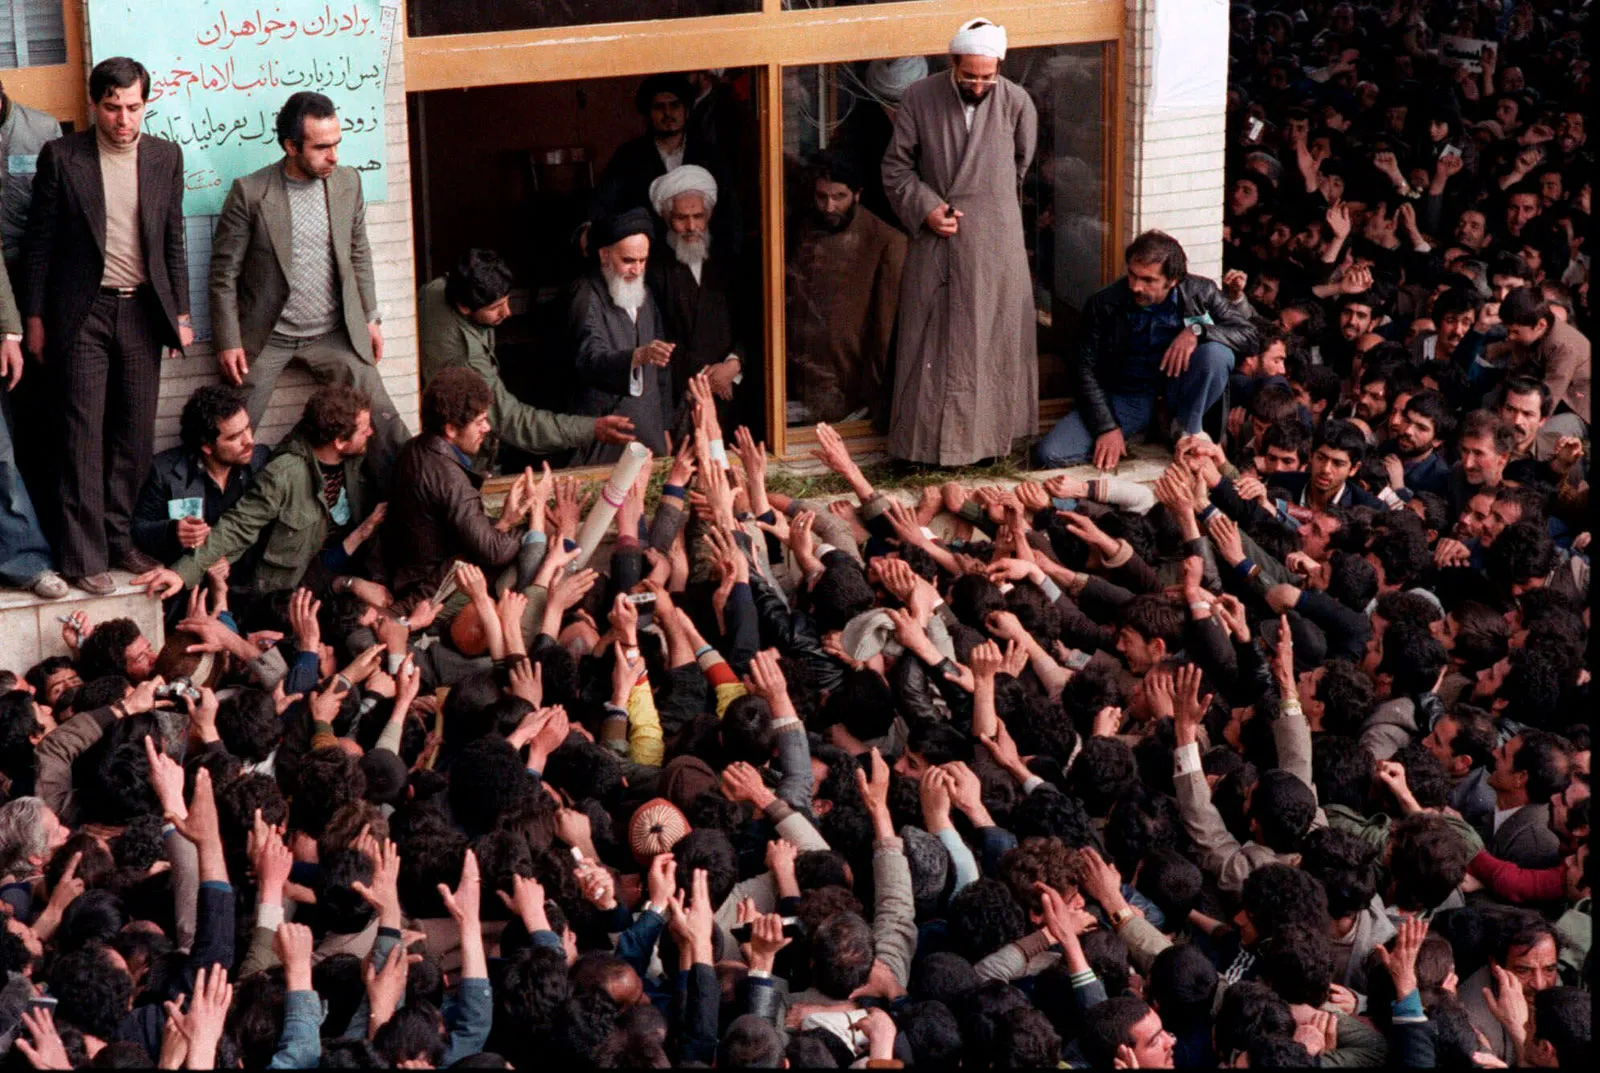 https://firebasestorage.googleapis.com/v0/b/fiveable-92889.appspot.com/o/images%2FRuhollah-Khomeini-greeting-supporters-Tehran-February-1979-ZdwqaPEkwwQ3.webp?alt=media&token=90896c46-27f7-459b-a290-c8455fdff137